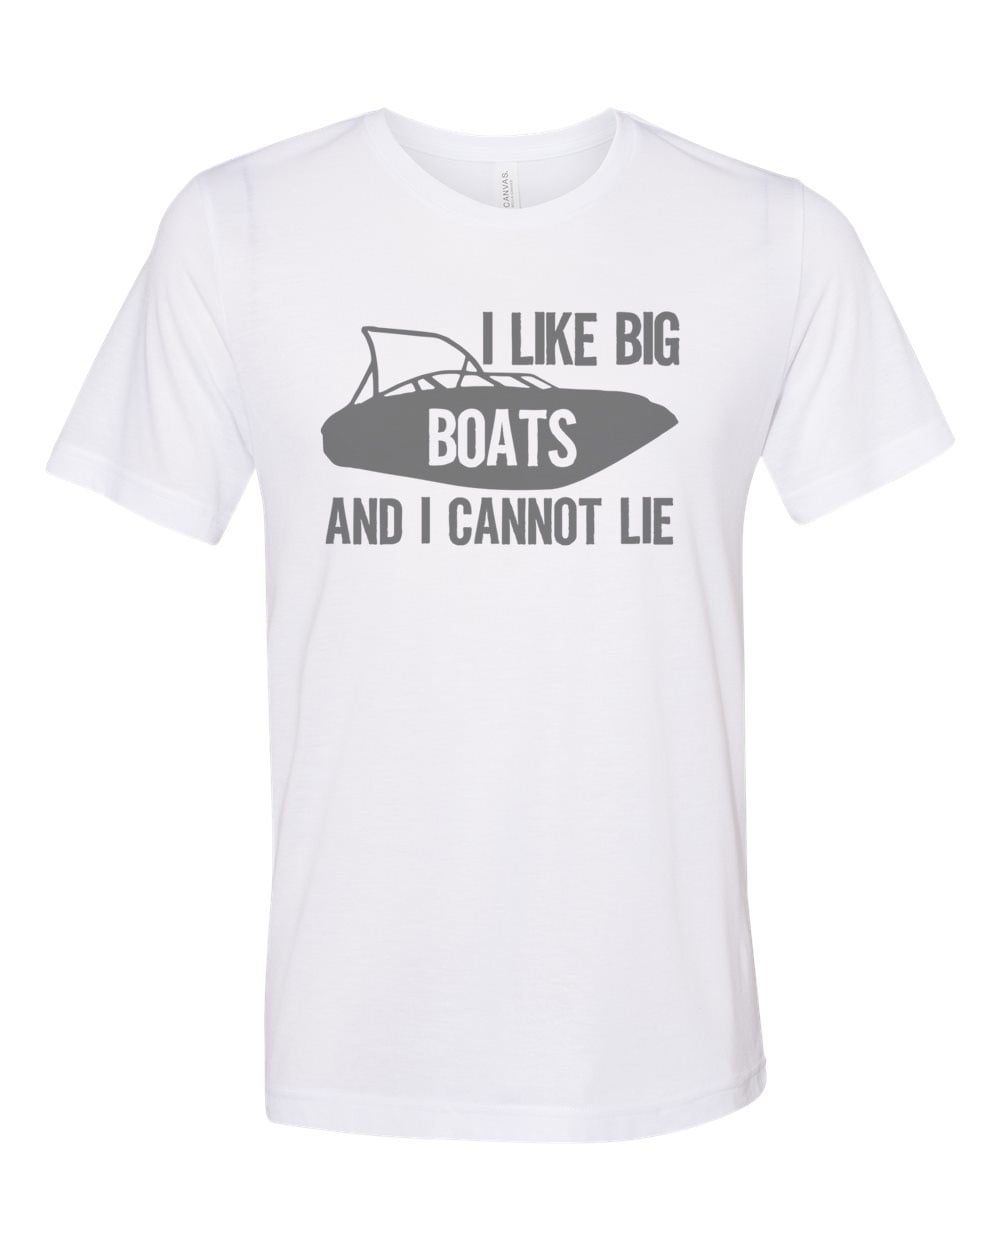 Boating Shirt, I Like Big Boats And I Cannot Lie, Unisex